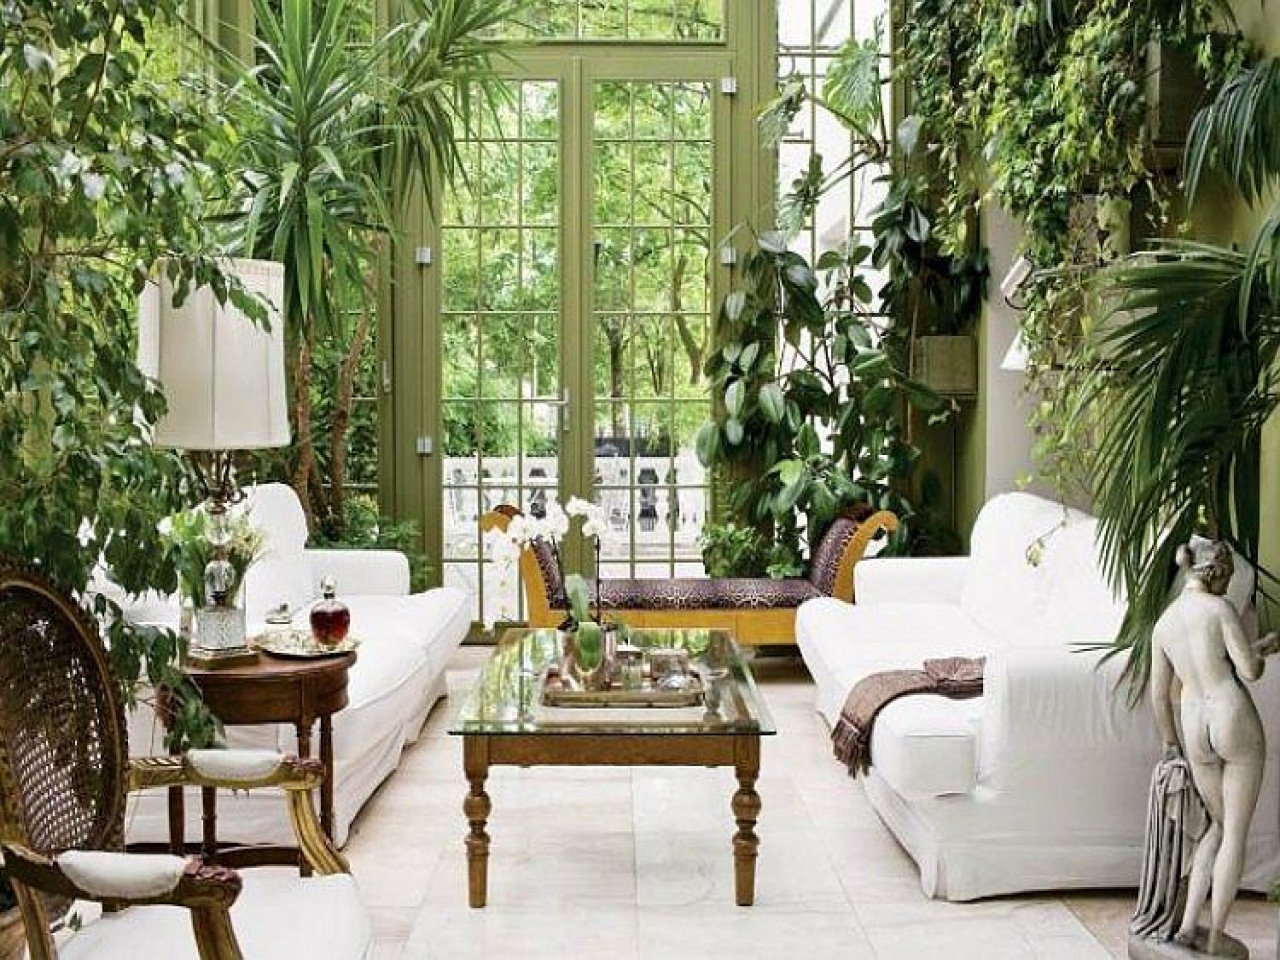 Best ideas about Indoor Vegetable Garden Ideas
. Save or Pin Sunroom house plans indoor ve able garden indoor garden Now.